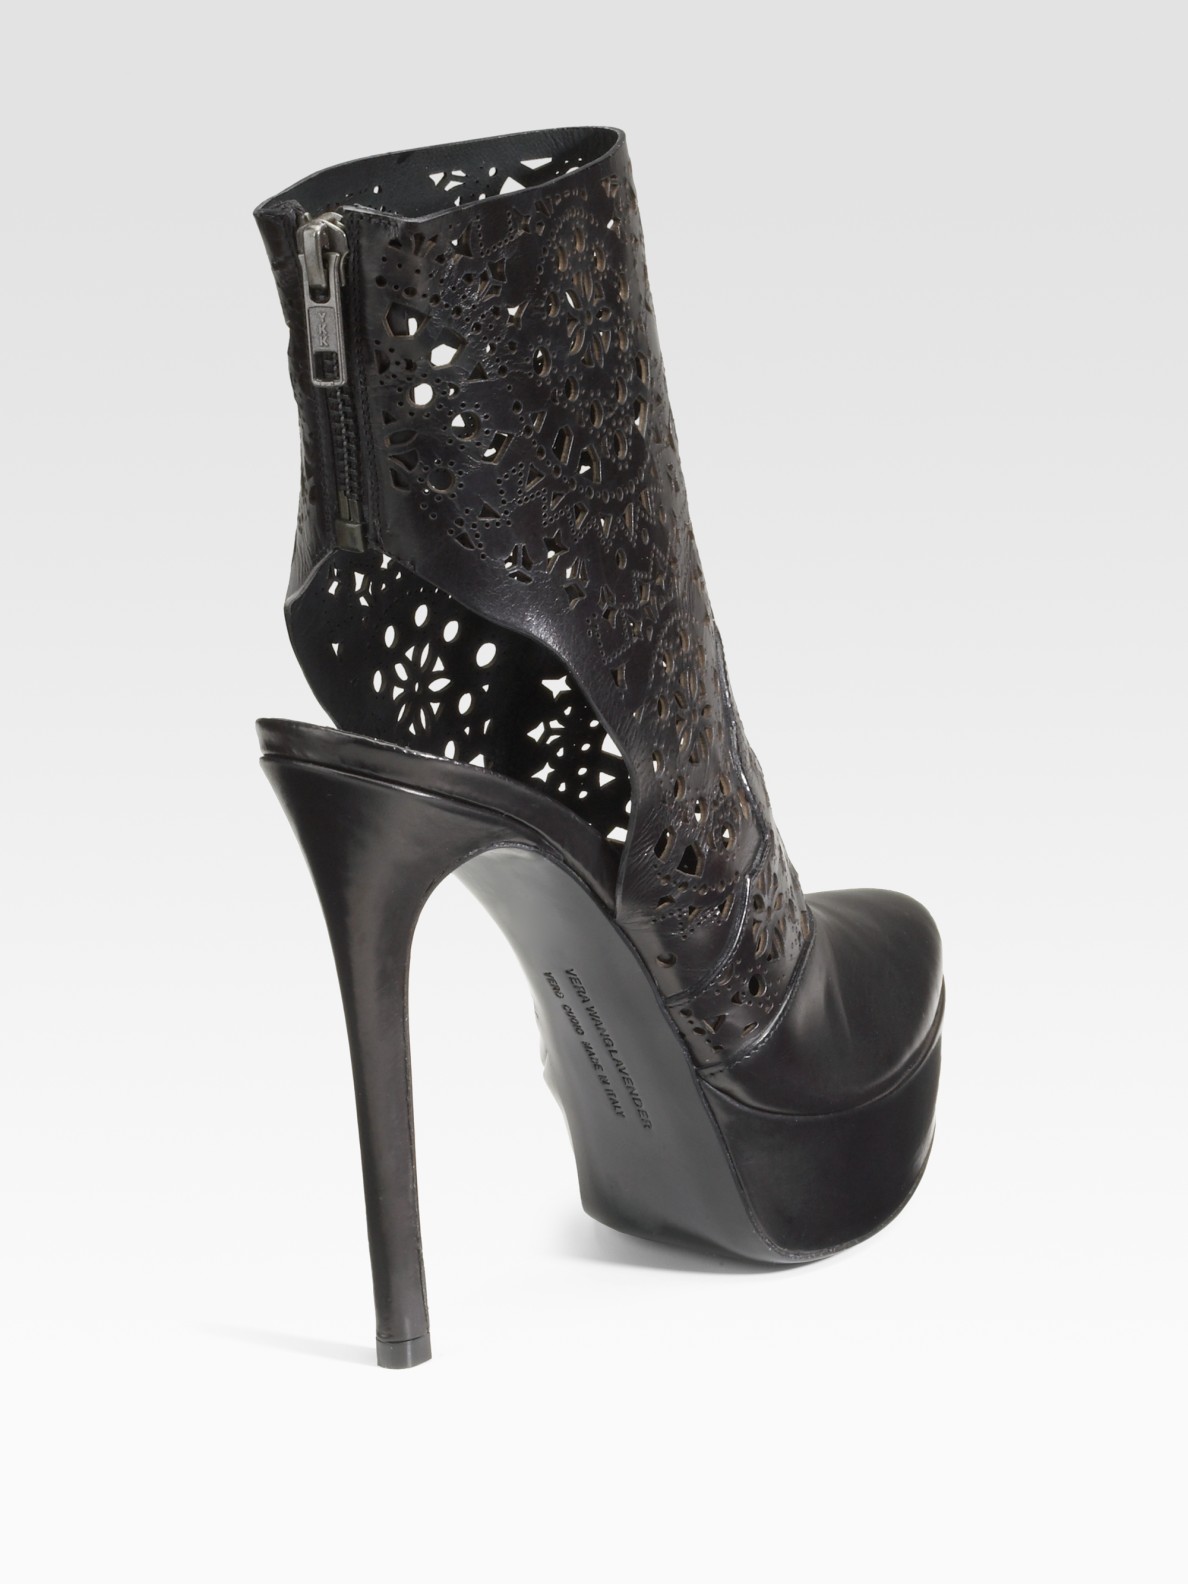 Vera wang lavender Verdi Platform Ankle Boots in Black | Lyst